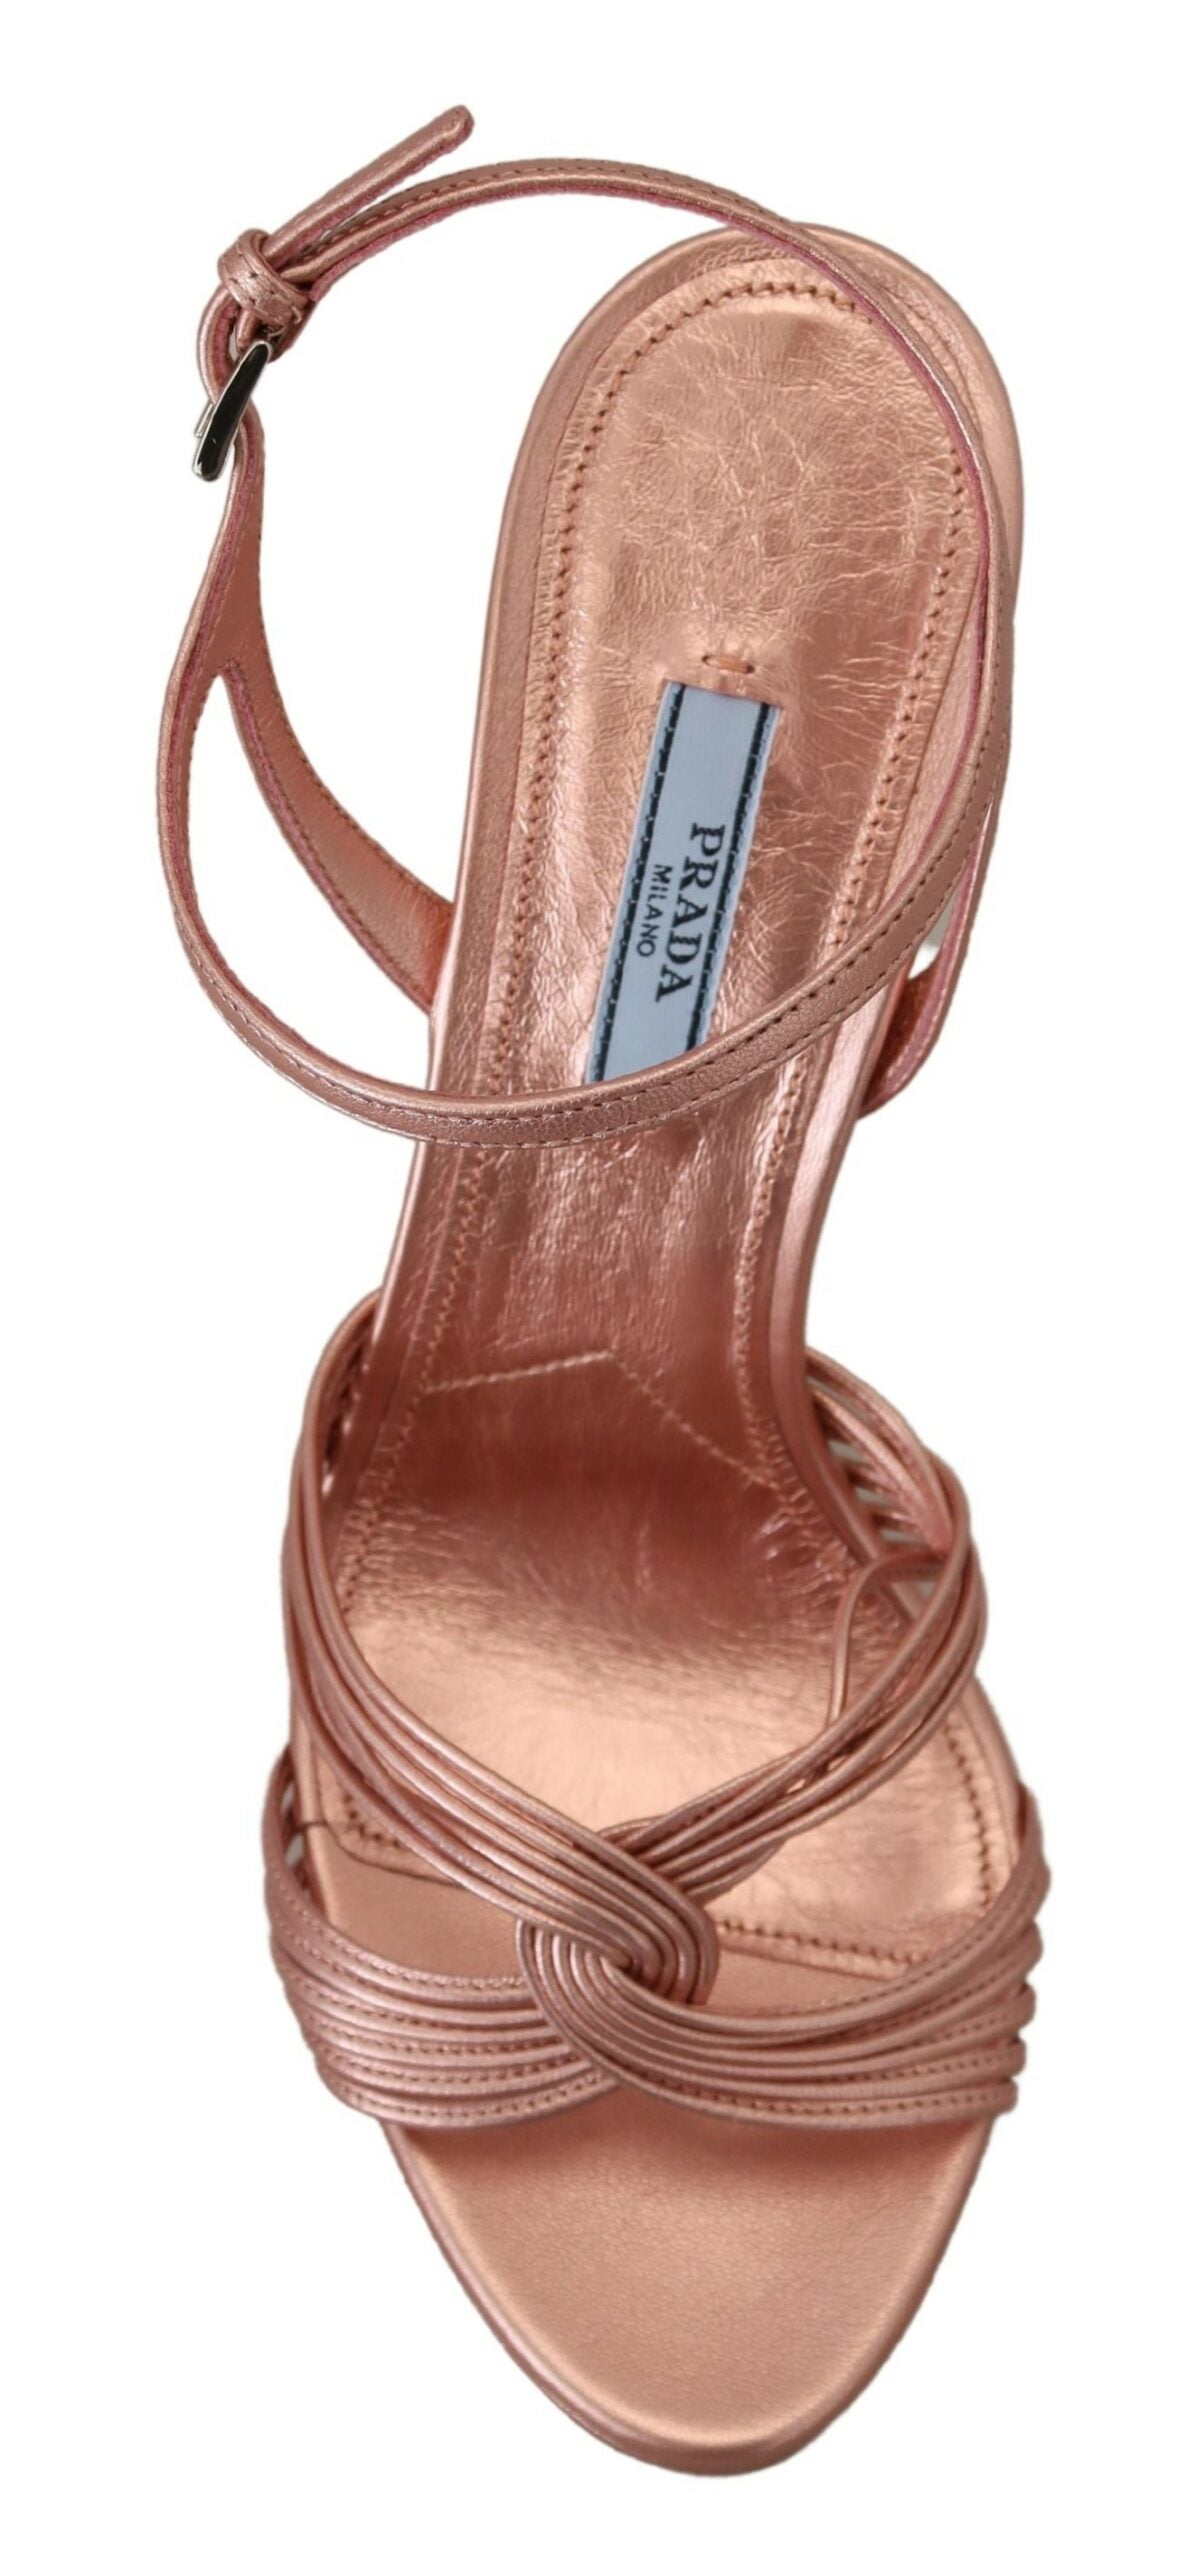 Prada Elegant Pink Stiletto Heel Sandals